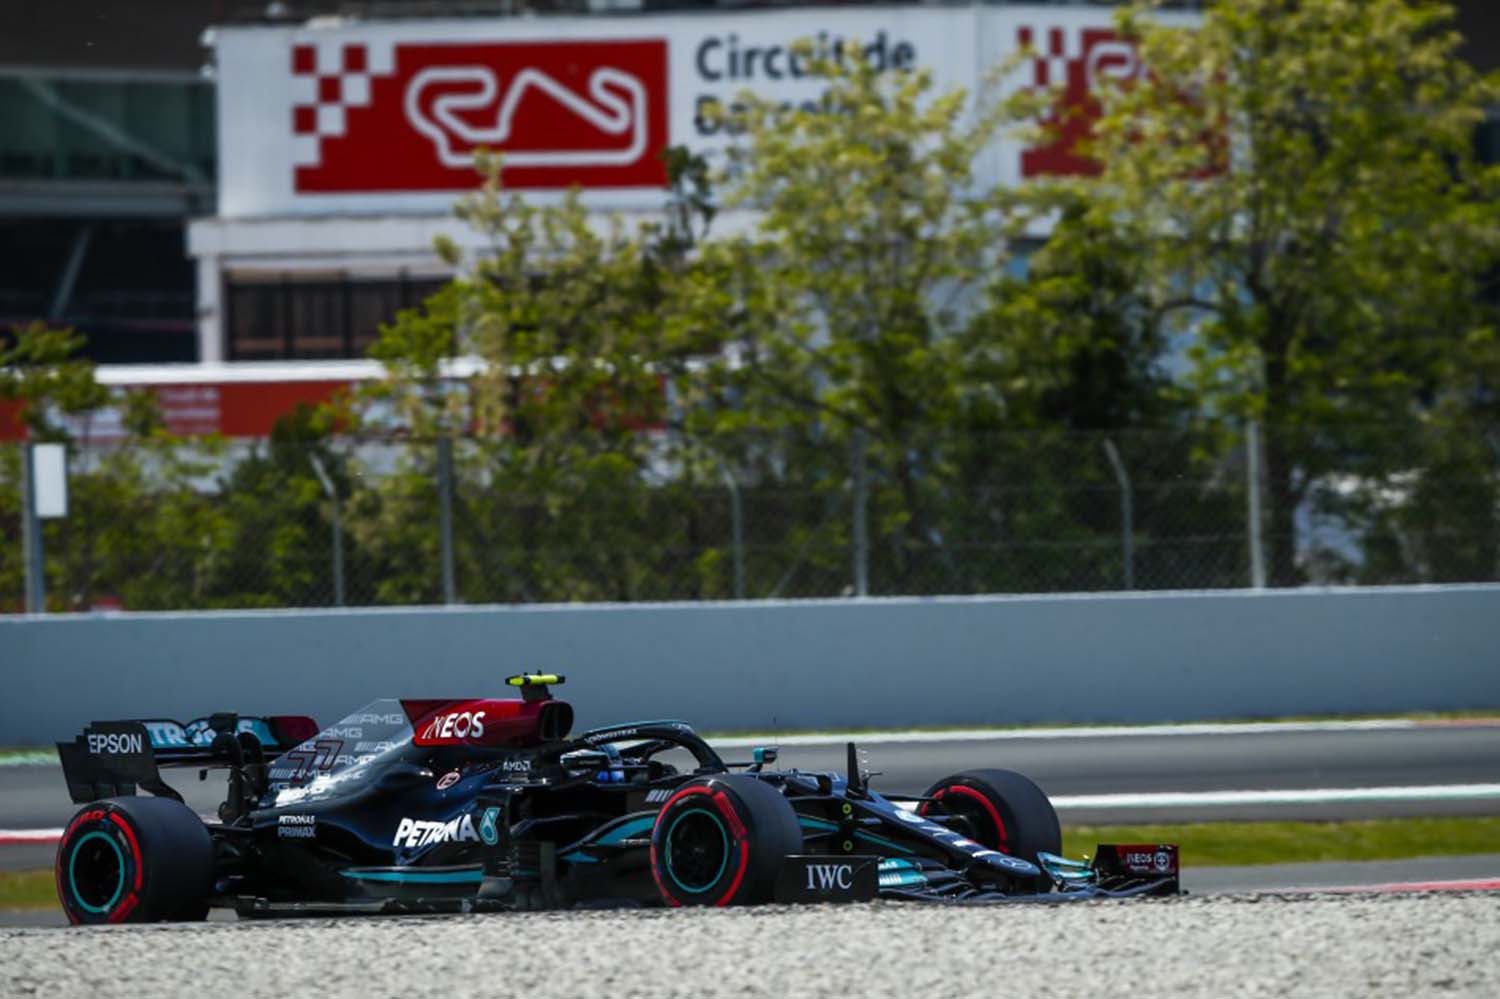 F1 – Bottas Quickest In First Practice For Spanish Grand Prix Ahead Of Verstappen